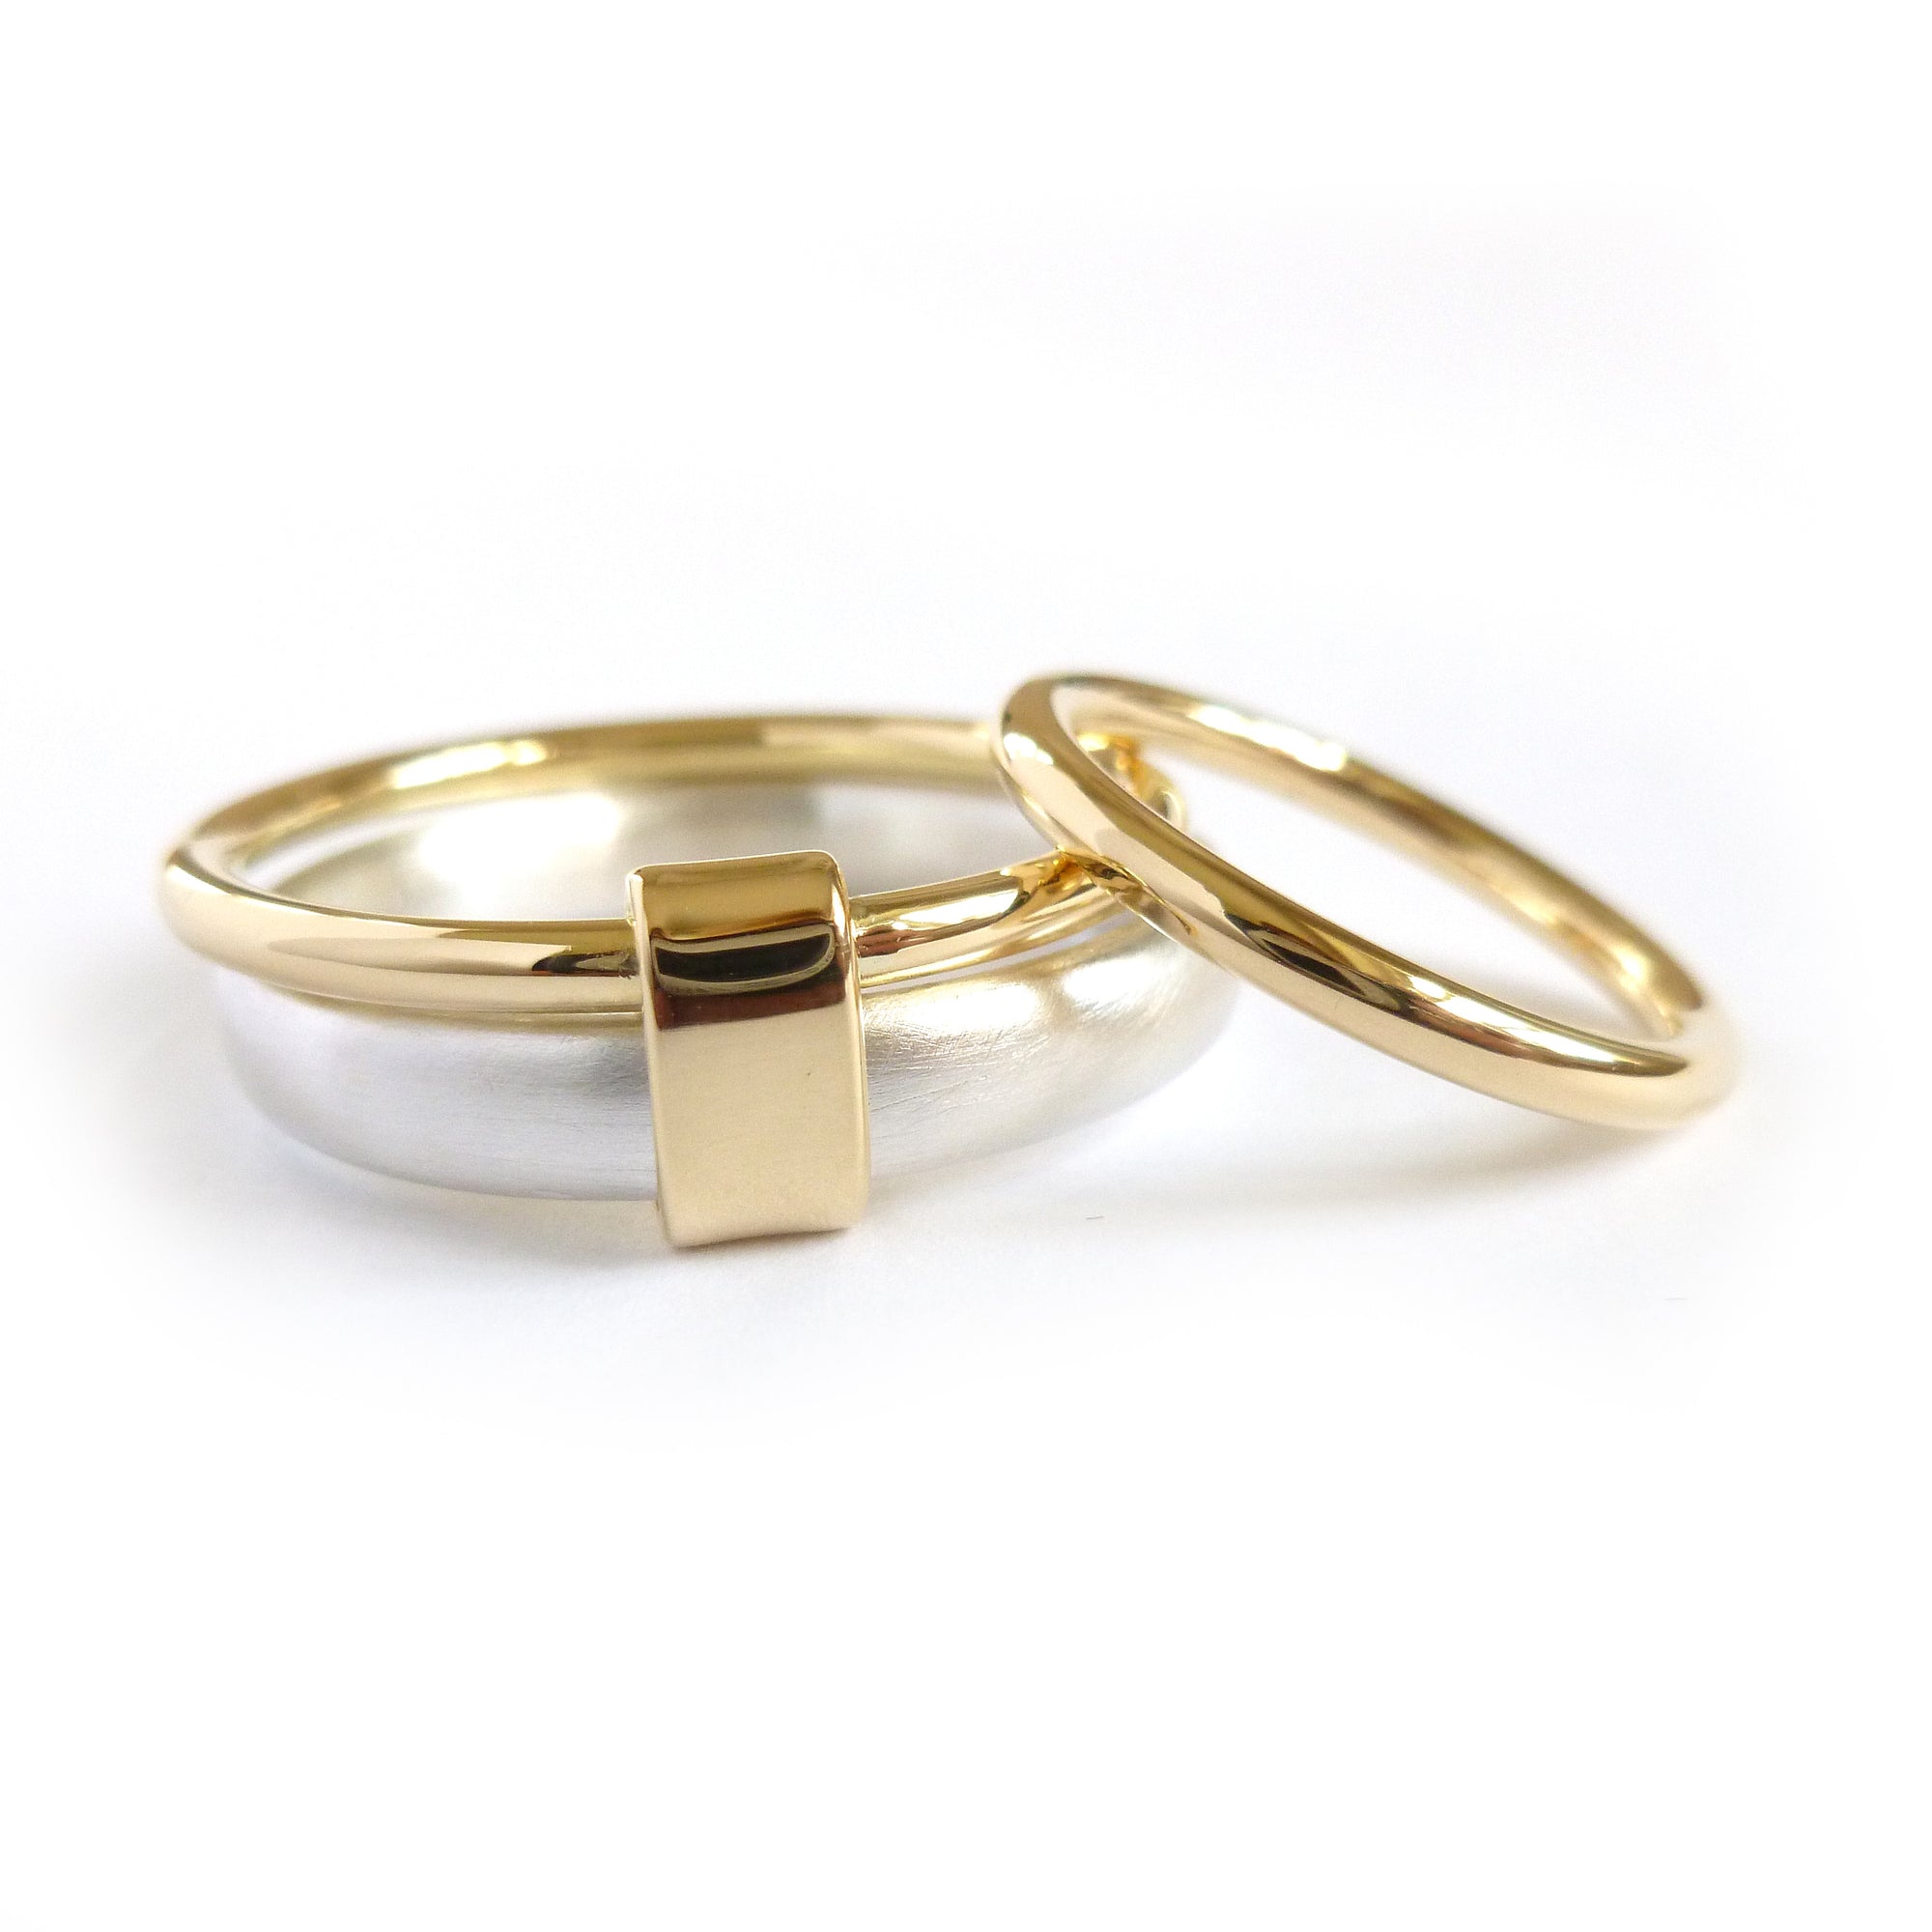 a modern set of 2 colour wedding rings for an alternative bride